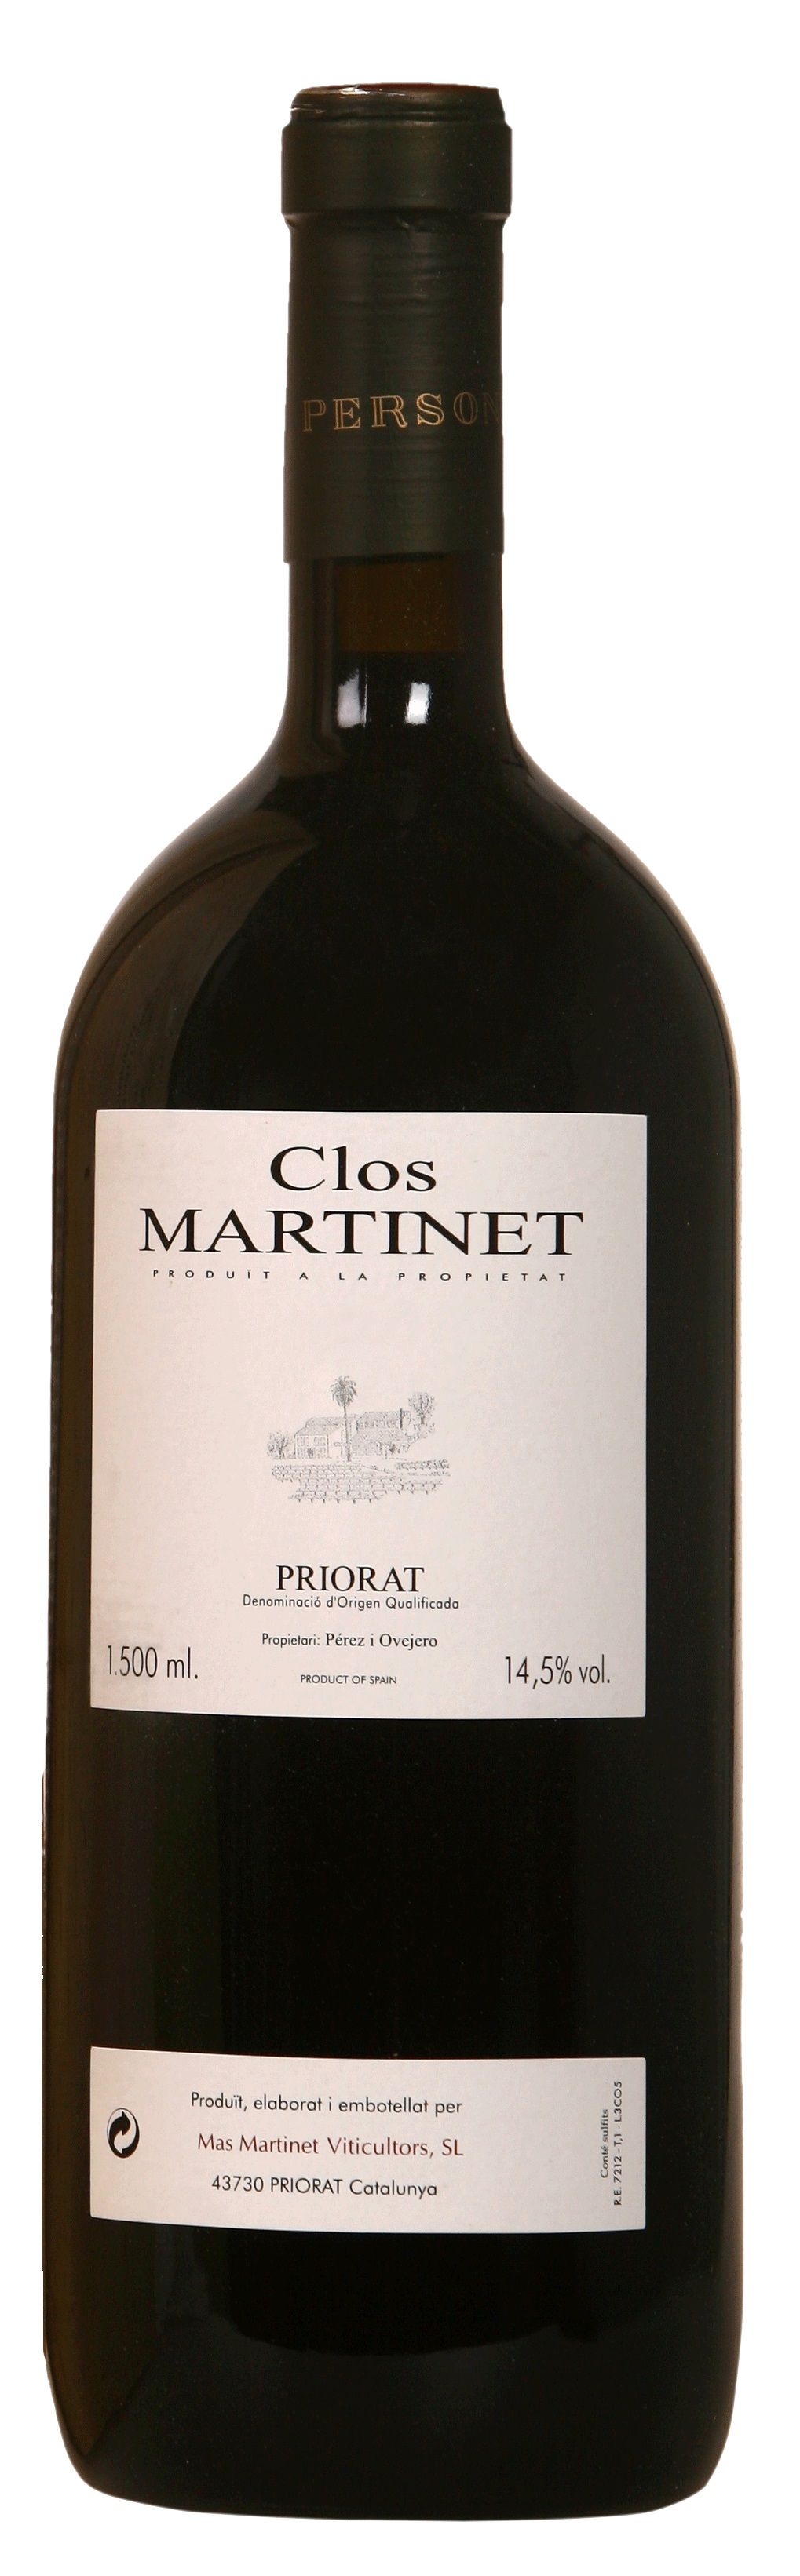 Mas Martinet, Clos Martinet, 2005